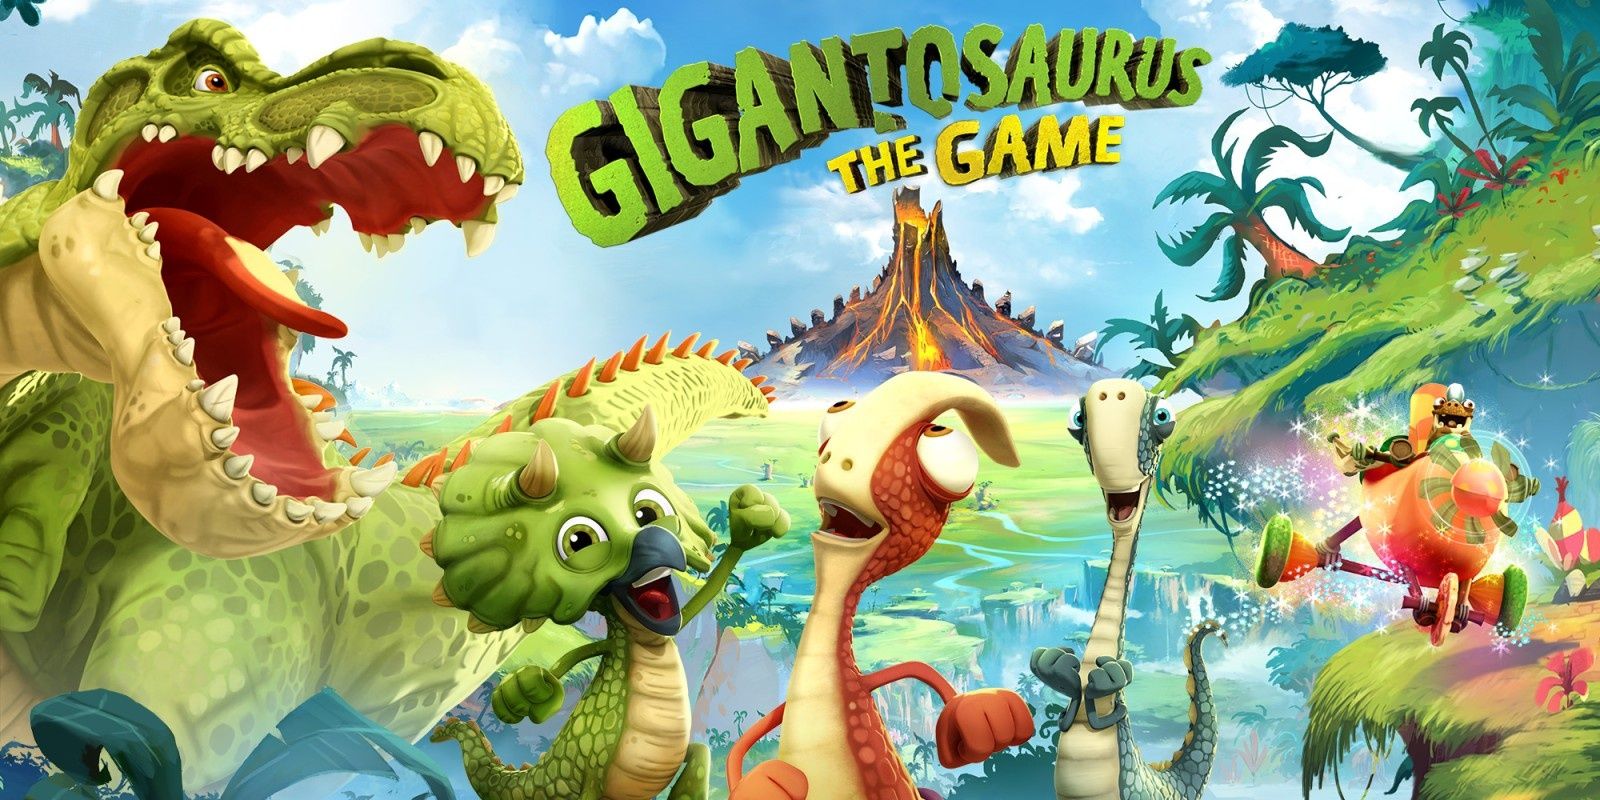 Gigantosaurs The Game